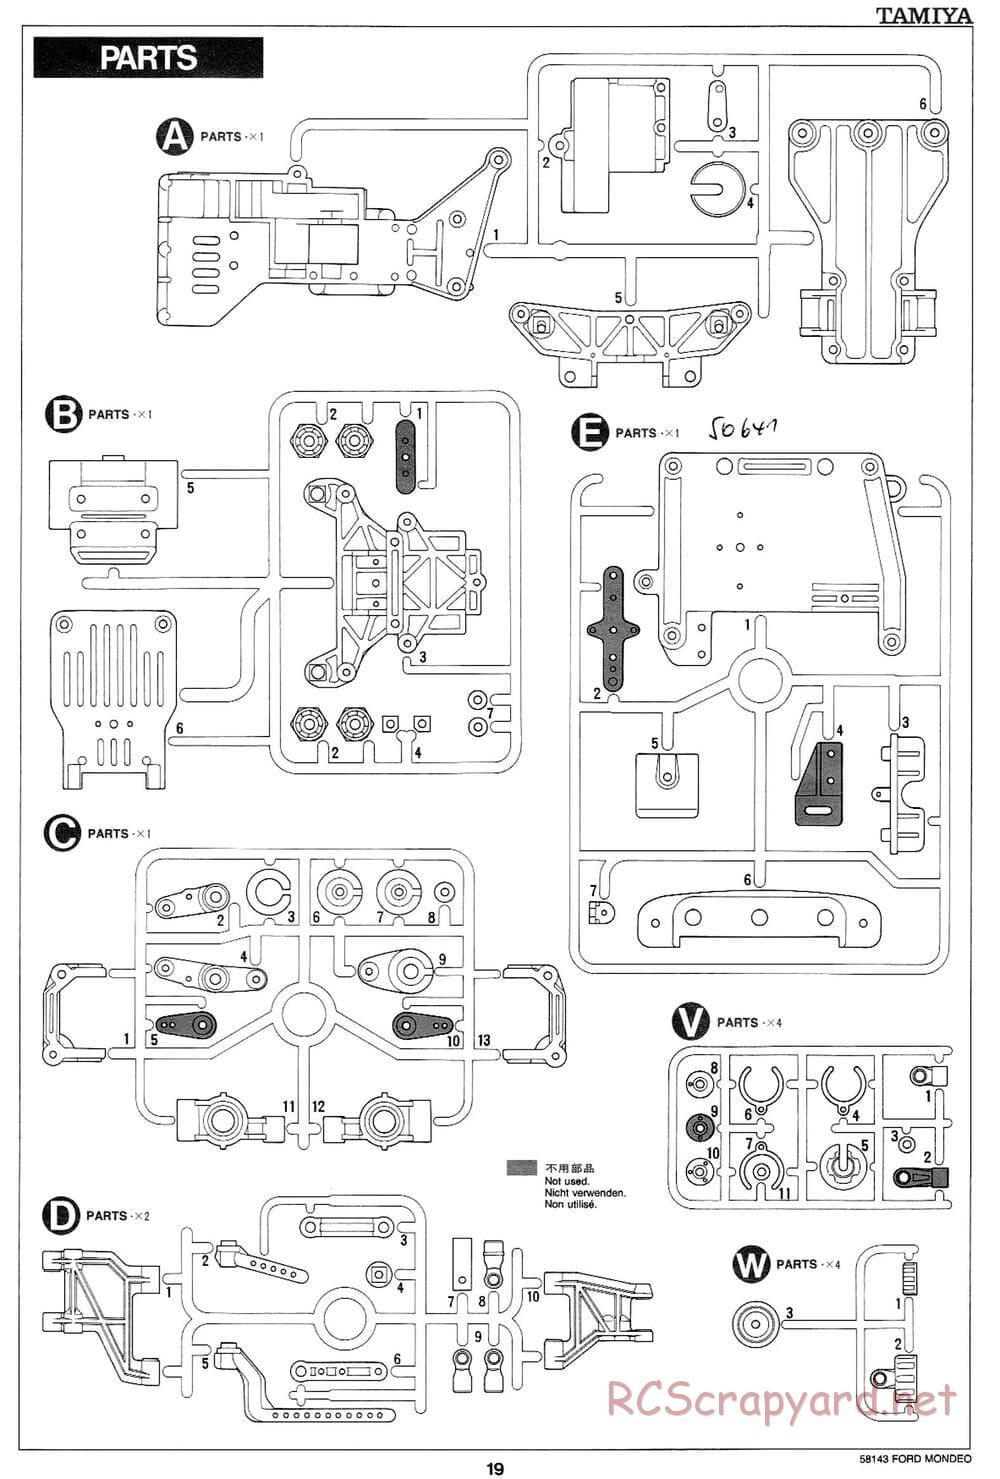 Tamiya - Ford Mondeo BTCC - FF-01 Chassis - Manual - Page 20